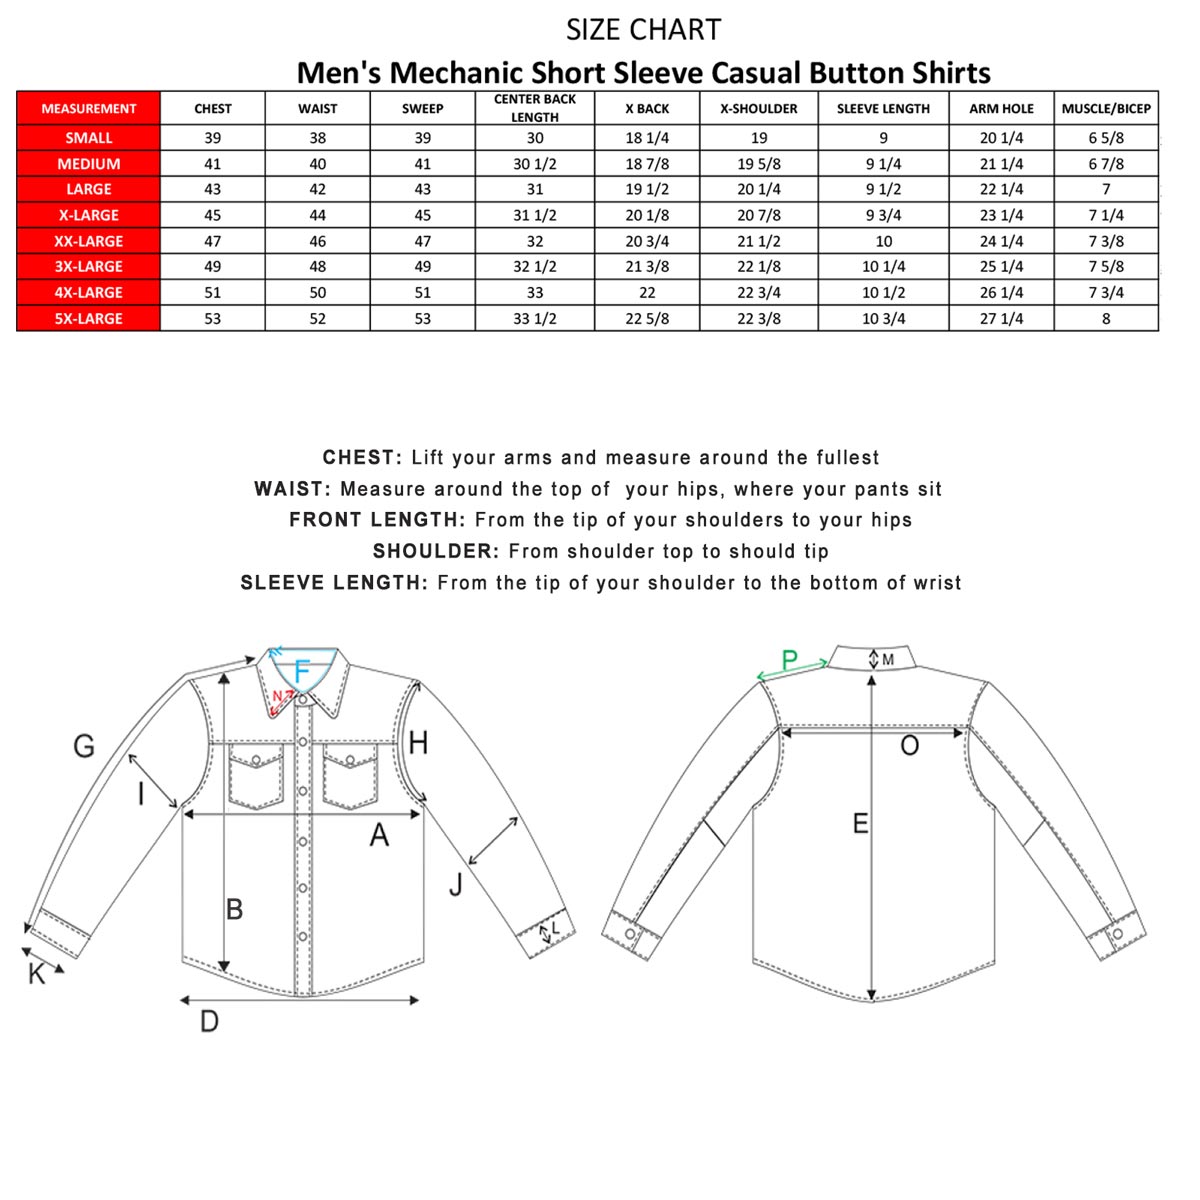 Milwaukee Leather MDM11668 Men's Grey Button Up Heavy Duty Work Shirt | Classic Mechanic Work Shirt w/ Pockets